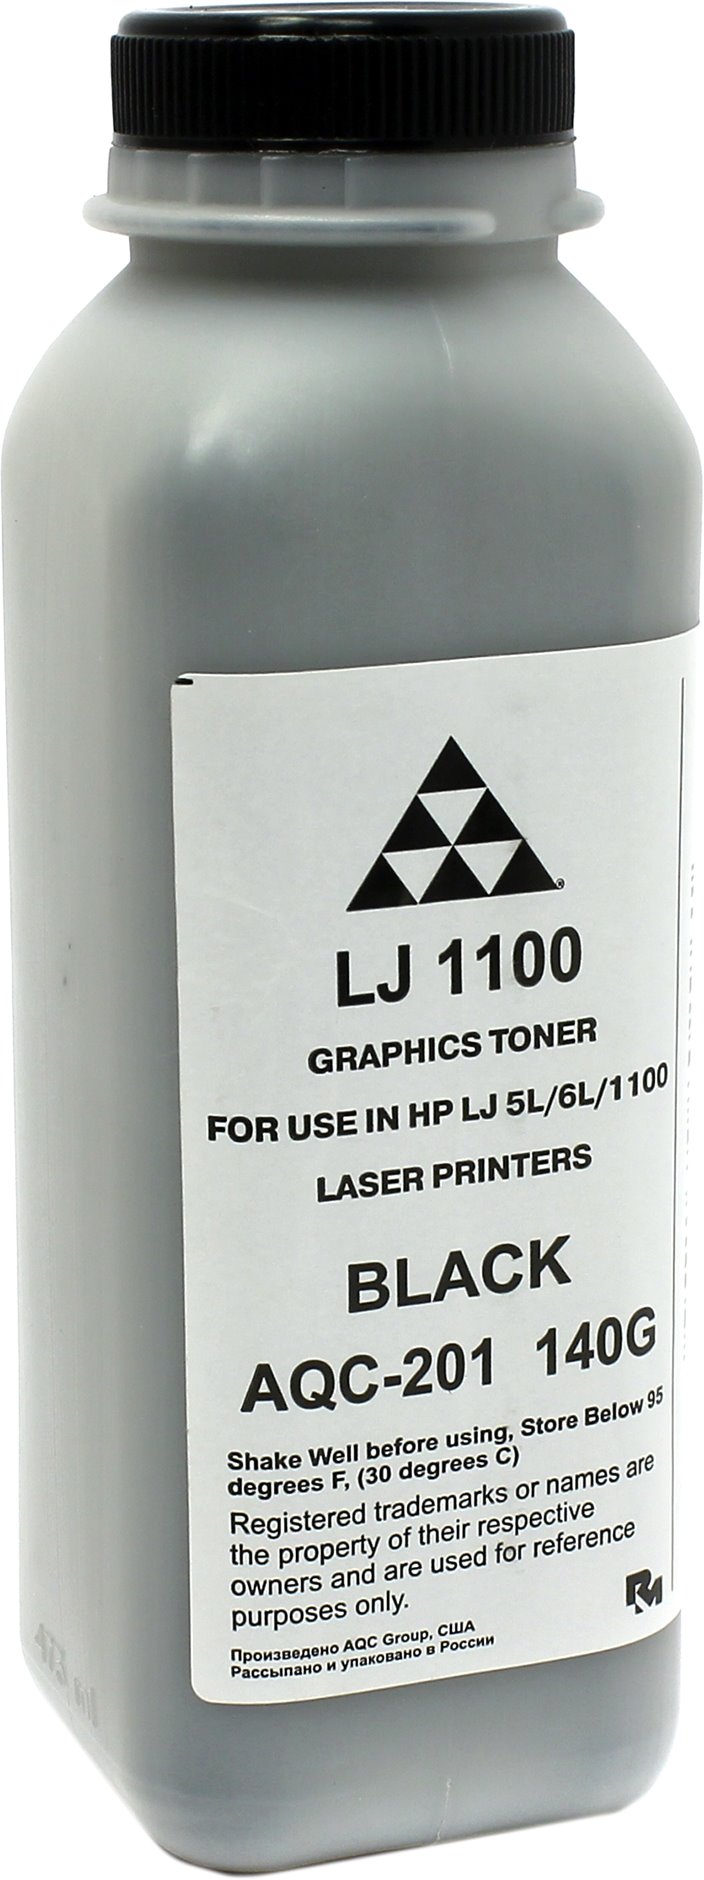 Тонер AQC AQC-201, бутыль 140 г, черный, совместимый для LJ 1100 / 1150 / 3100 / 5L / 6L